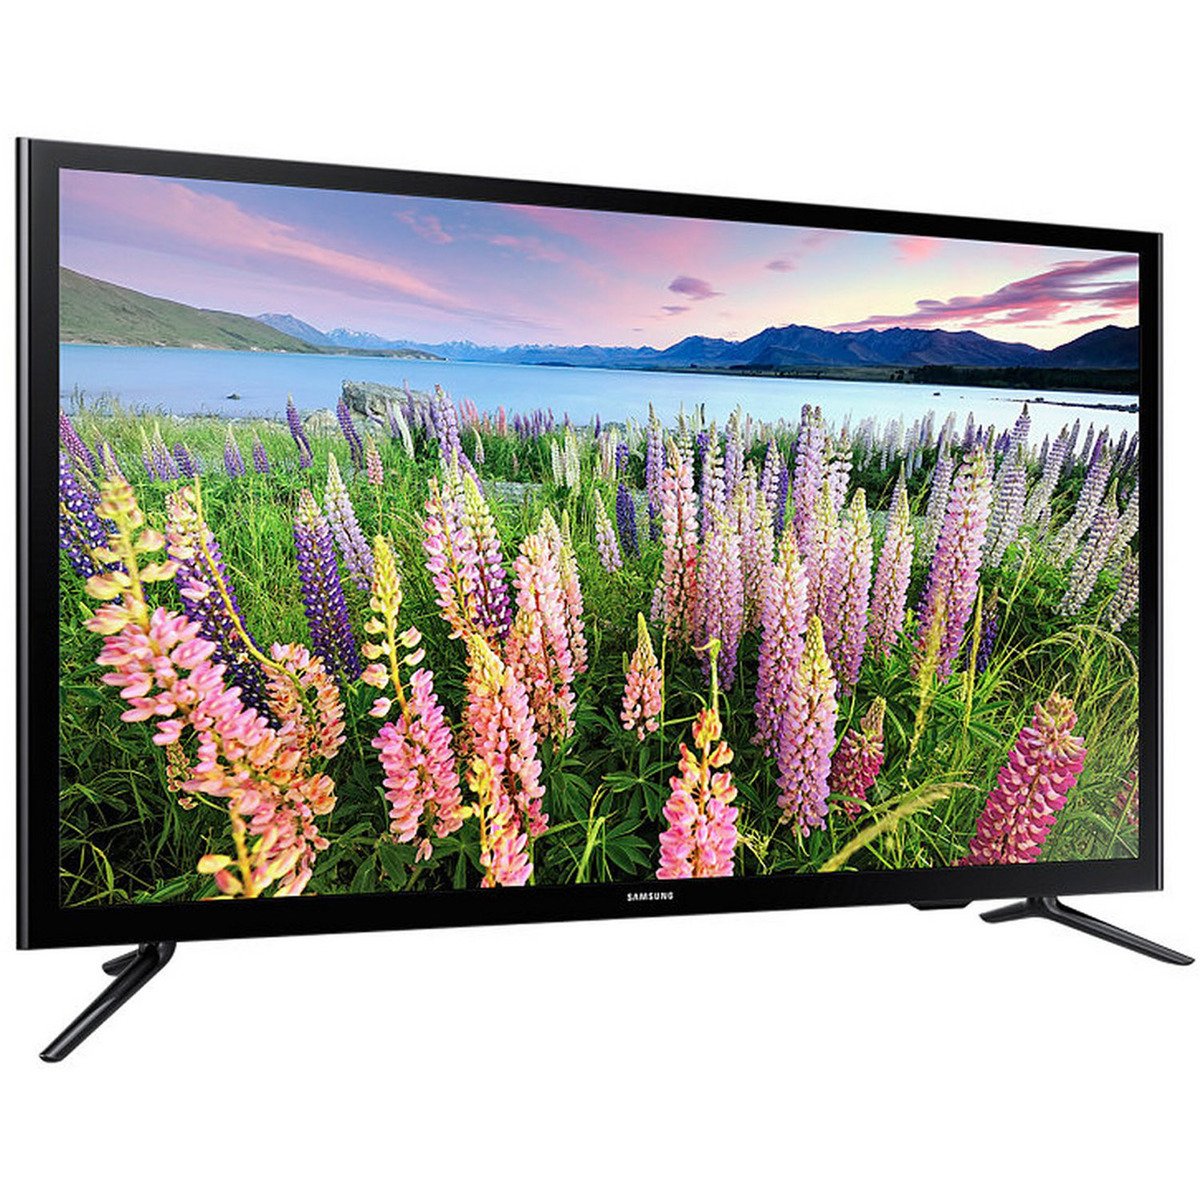 Samsung Smart LED TV UA40J5200AK 40inch